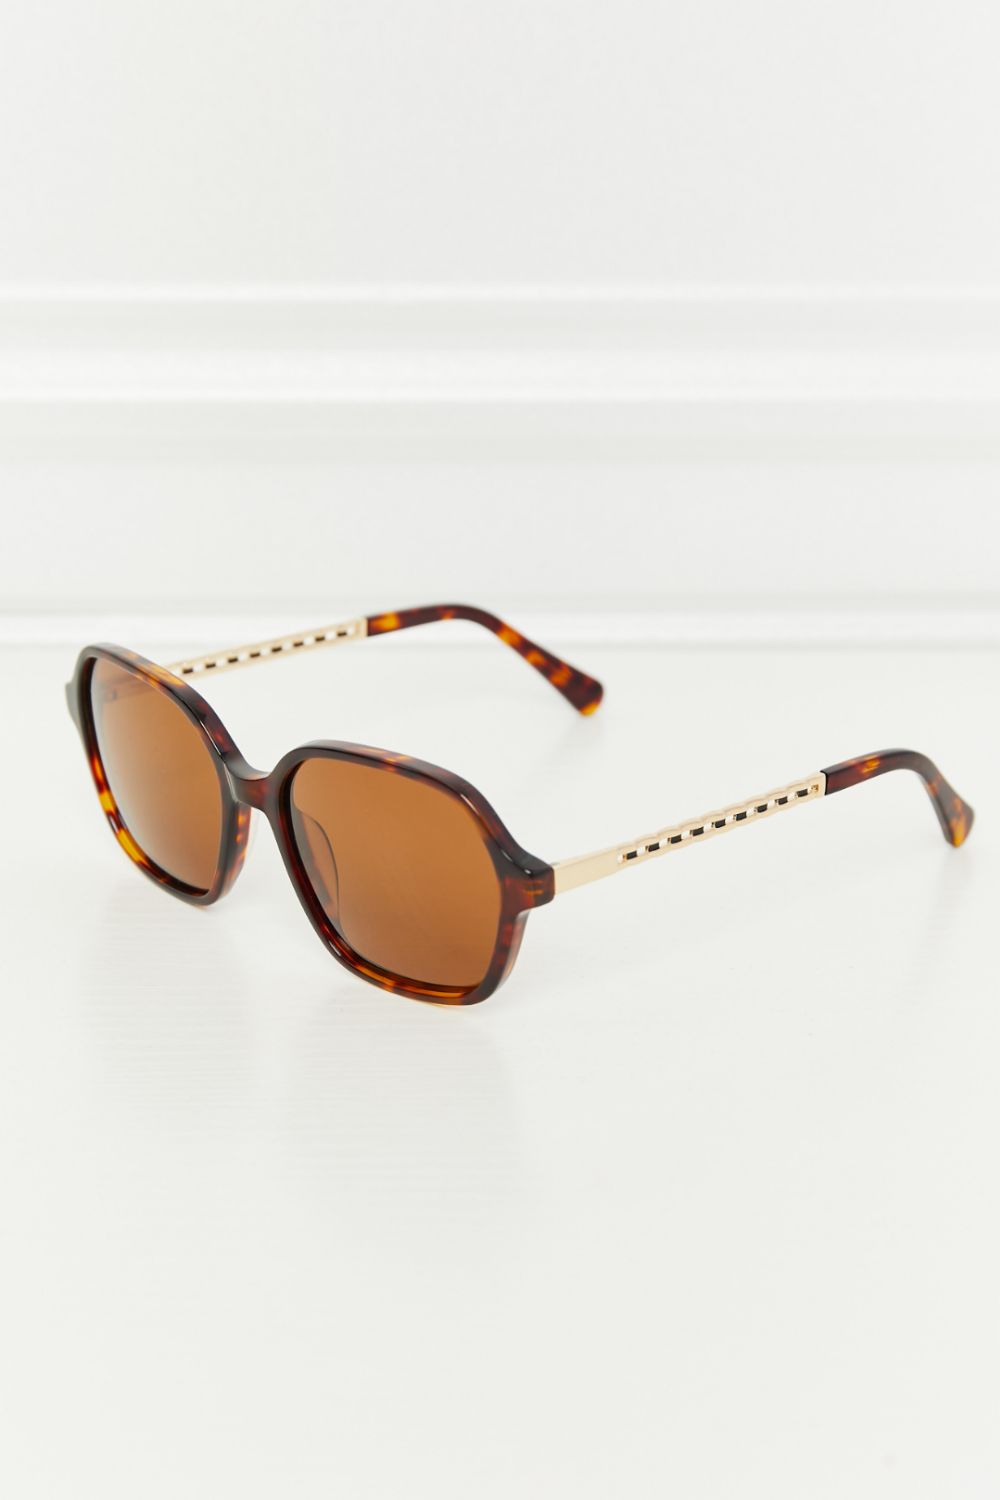 TAC Polarization Lens Full Rim Sunglasses Brown One Size